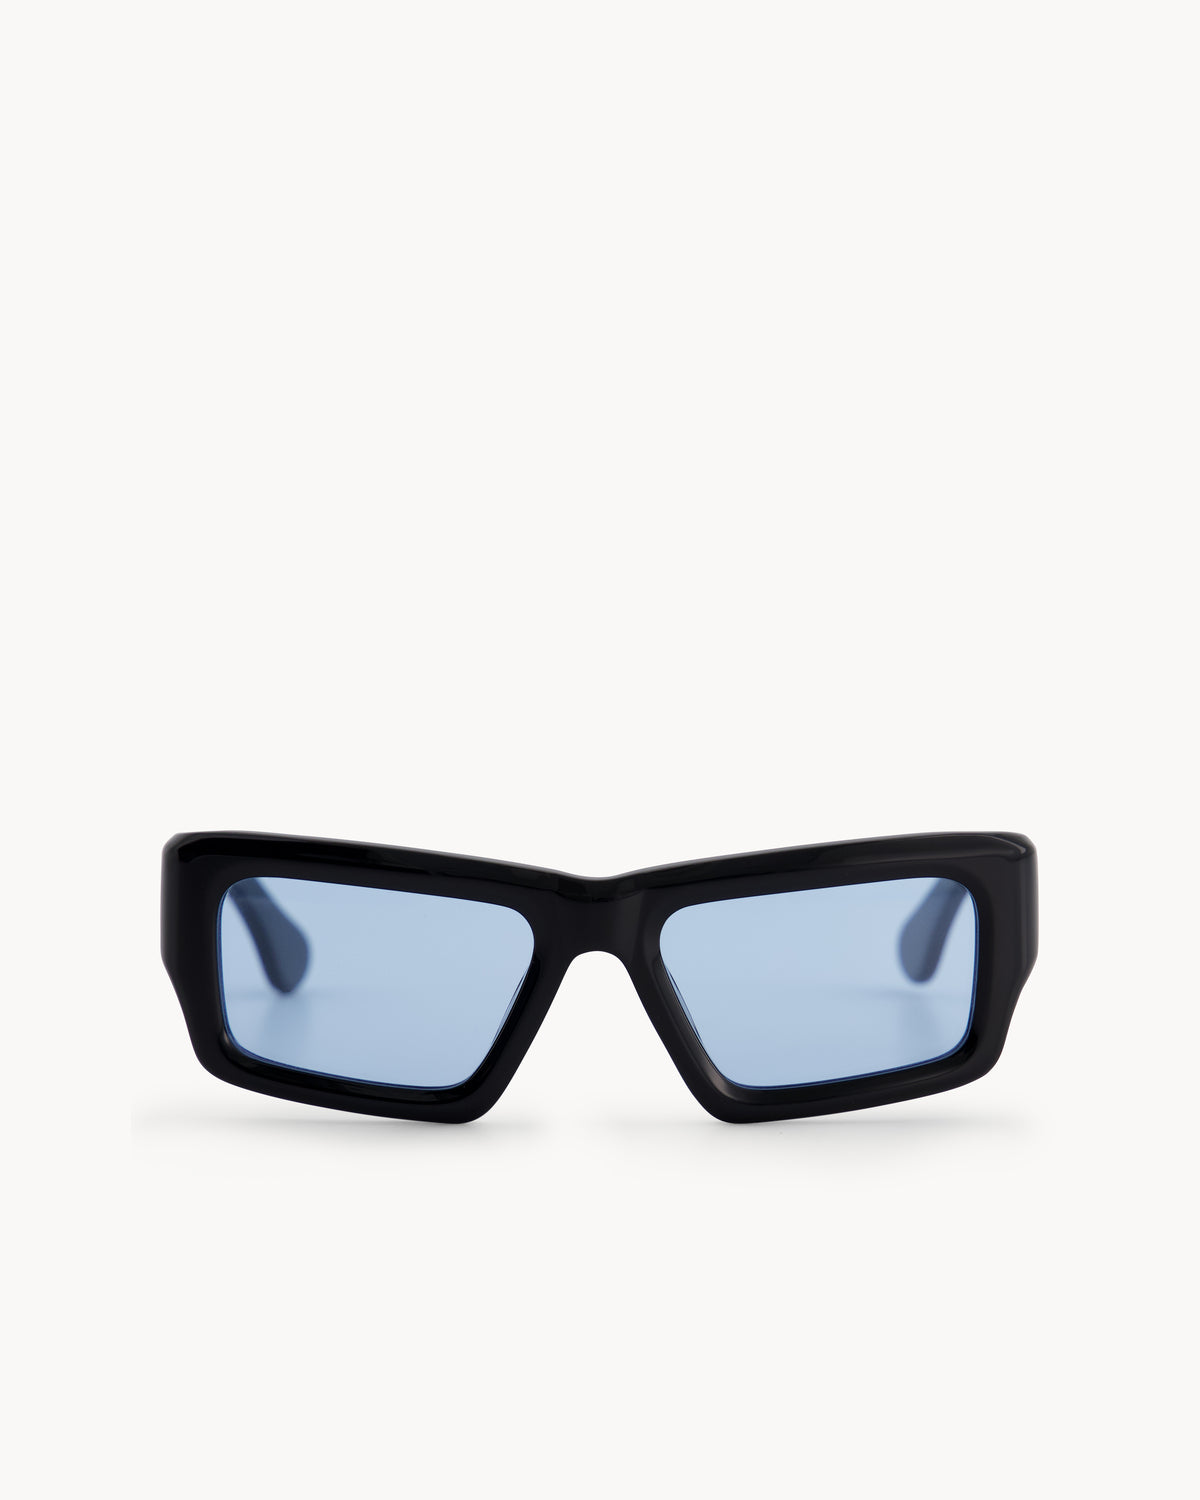 Port Tanger Sabea Sunglasses in Black Acetate and Rif Blue Lenses 1